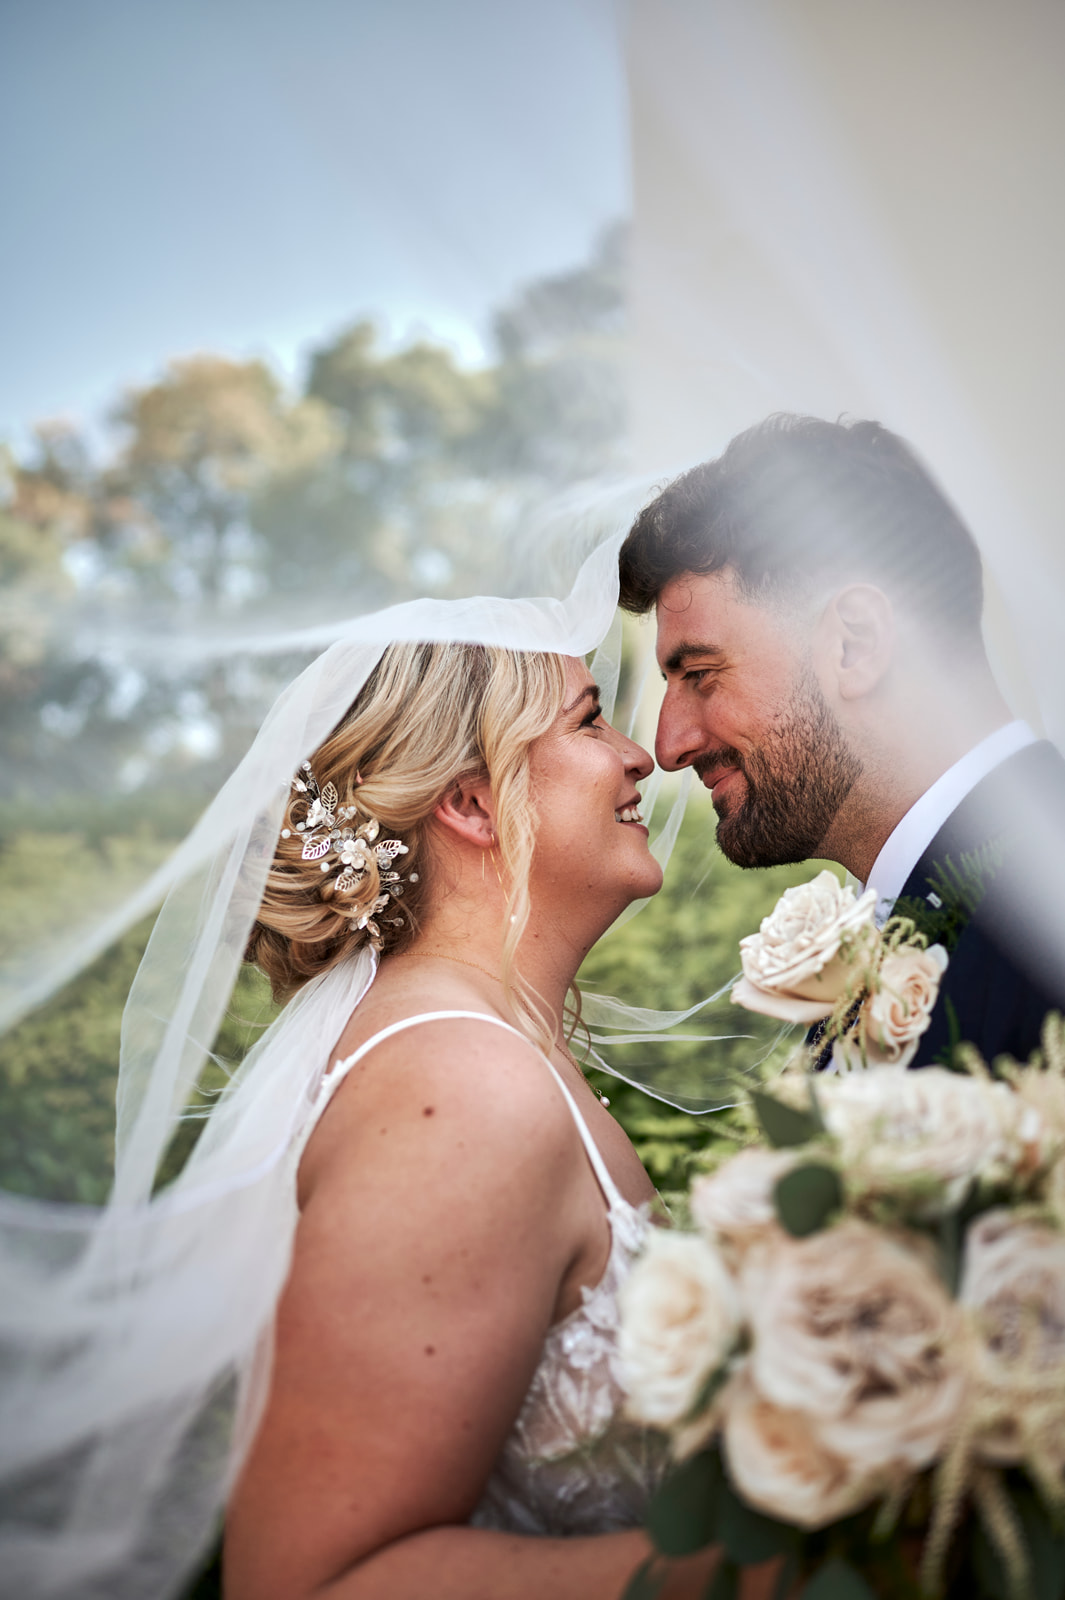 Talbooth House & Spa Wedding - Rachel Reeve Photography Veil with Couple